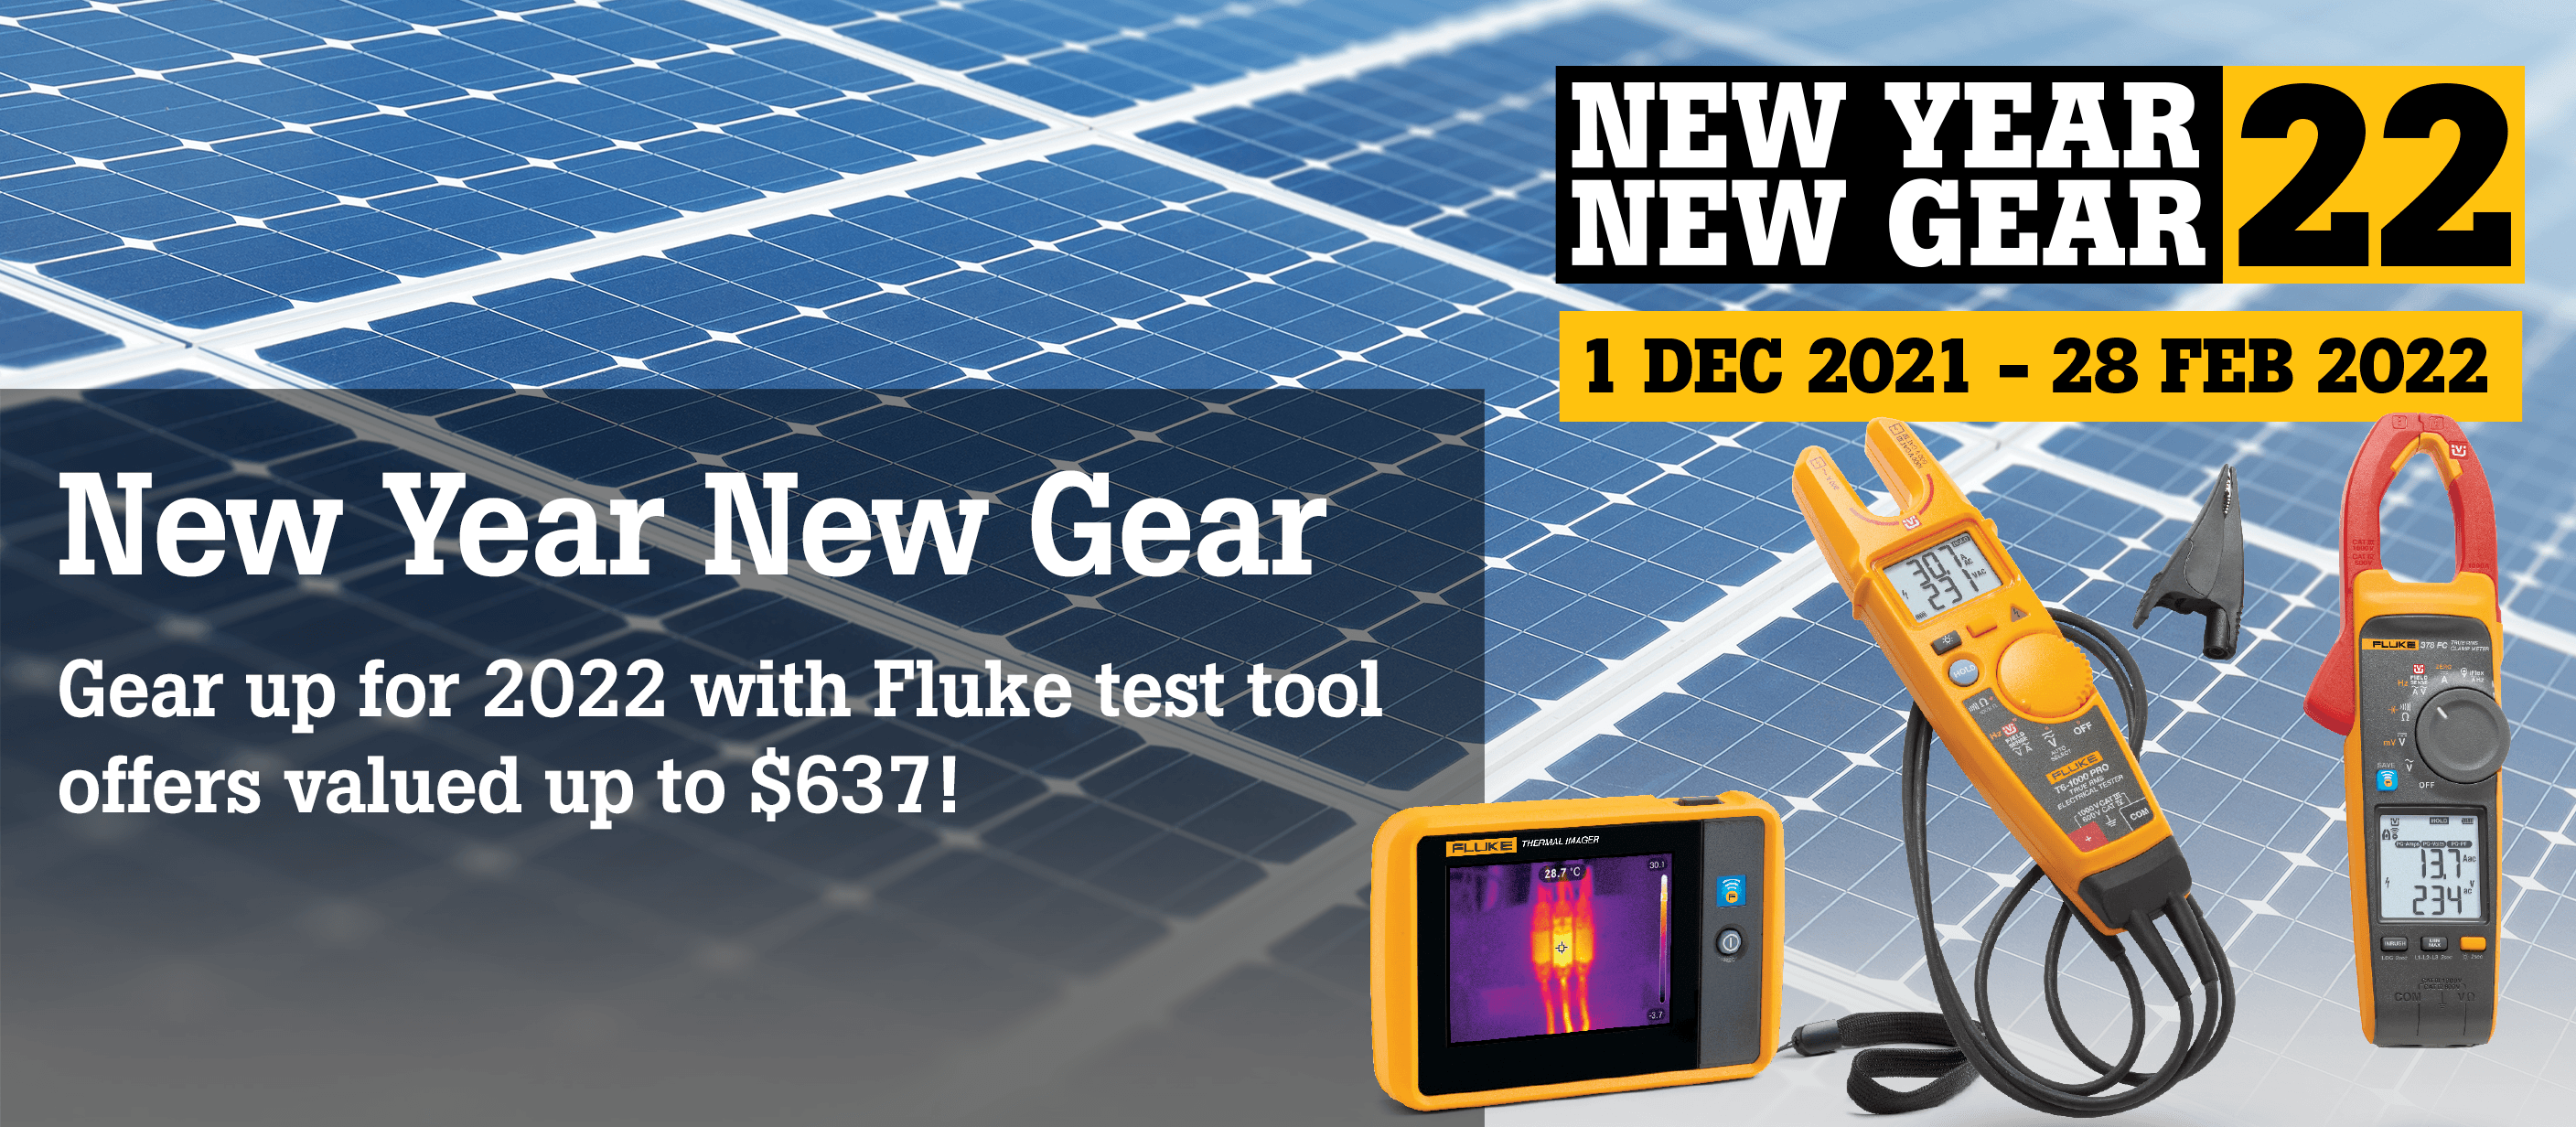 Fluke New Year New Gear 2022